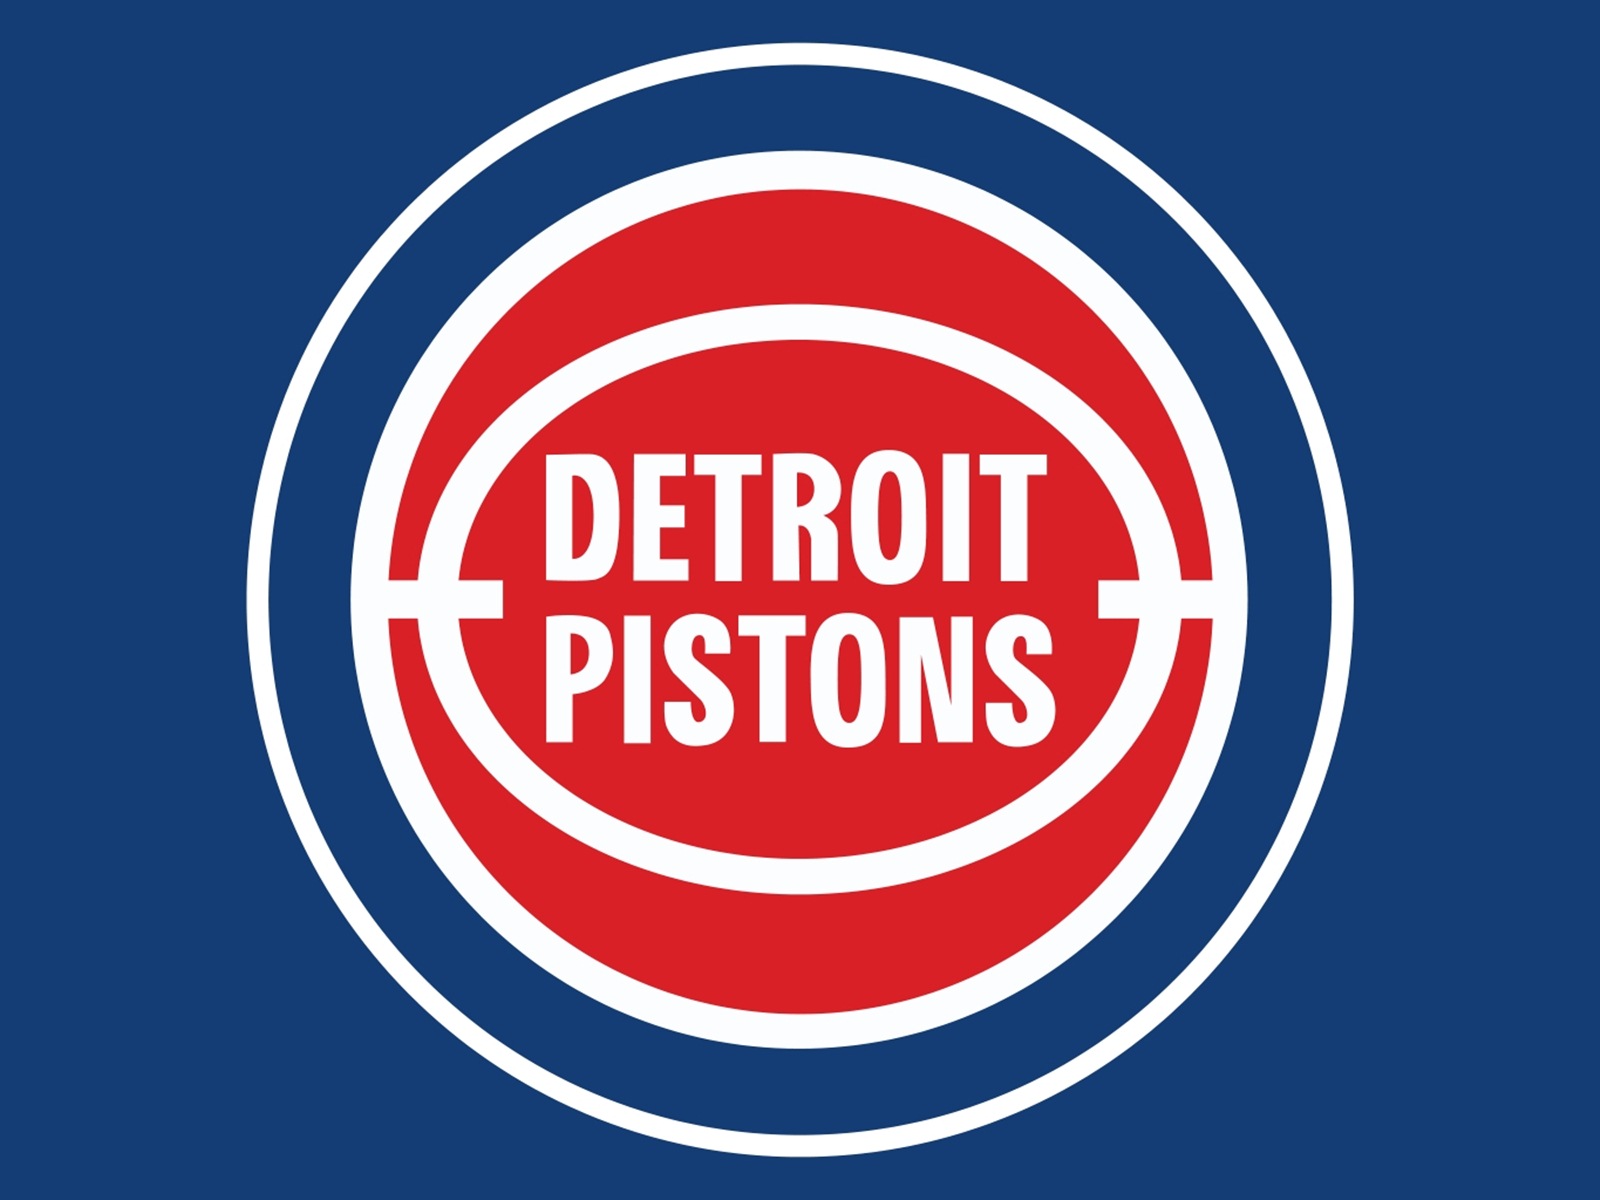 Detroit pistons. Детройт Пистонс. Detroit Pistons logo. Detroit Pistons на аву. Обои Детройт Пистонс на телефон.